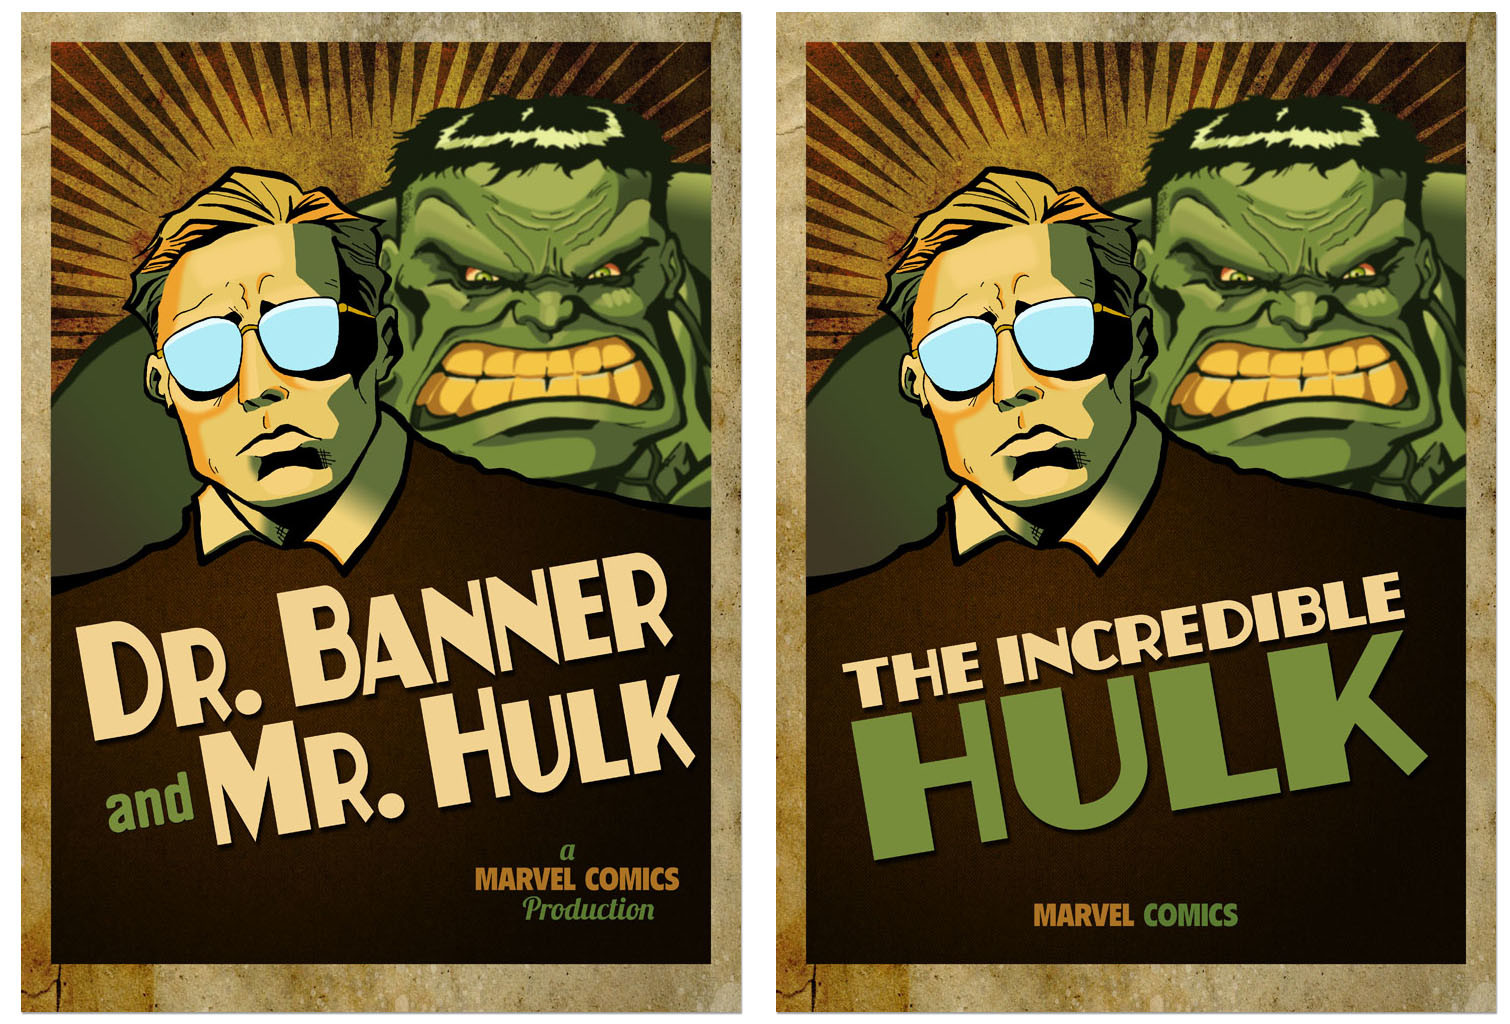 Dr. Banner and Mr. Hulk poster